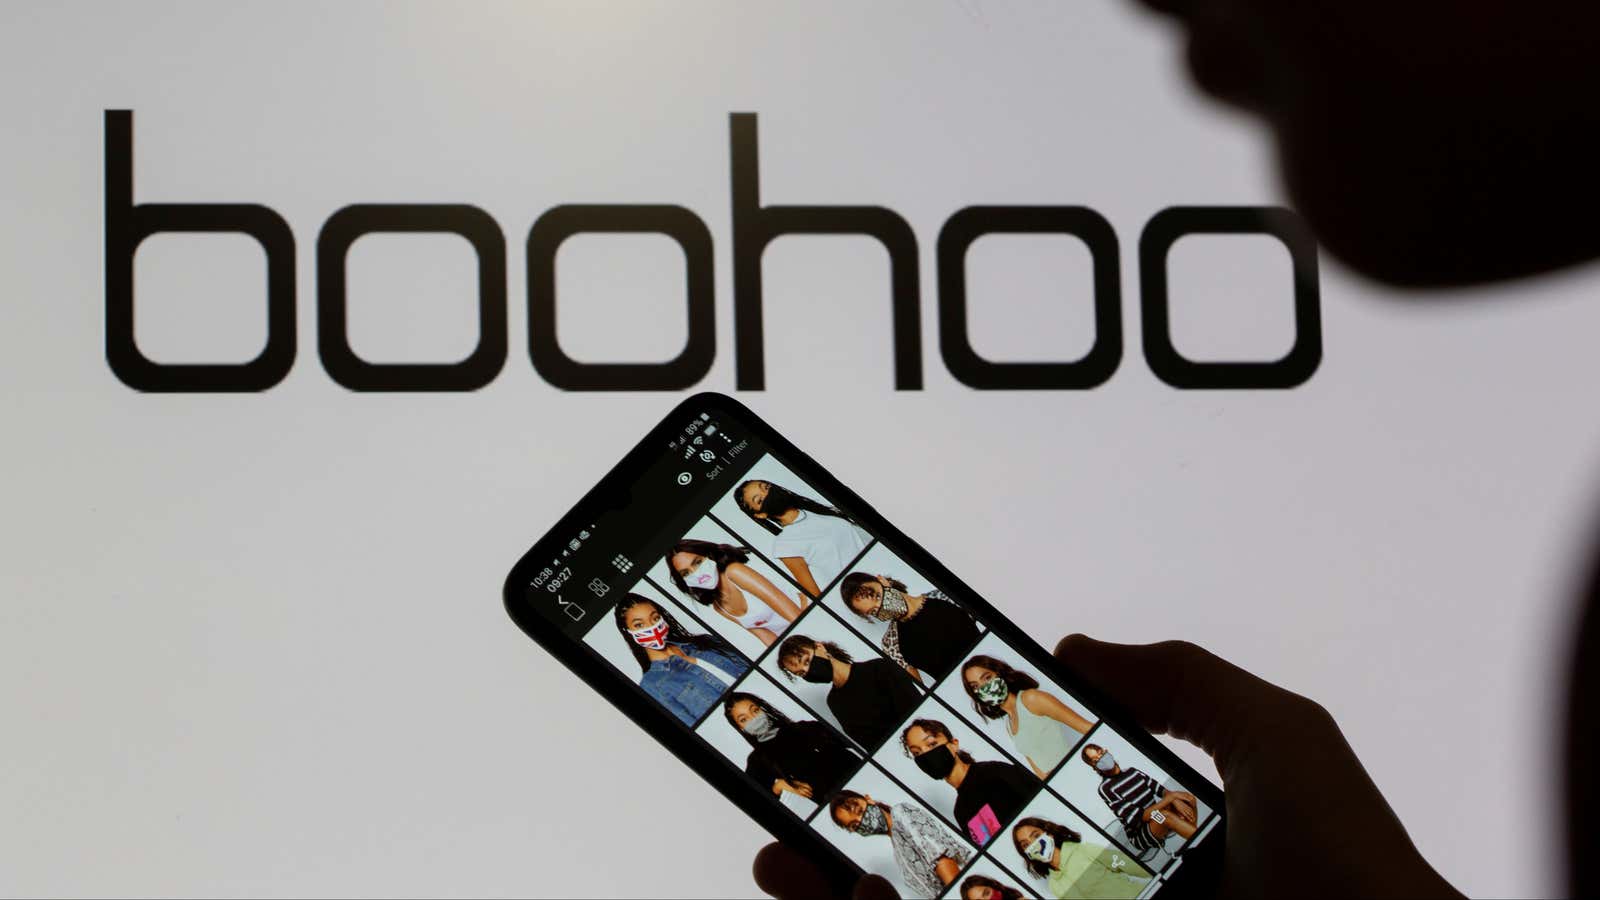 Online fashion retailer Boohoo is the new owner of Debenhams.